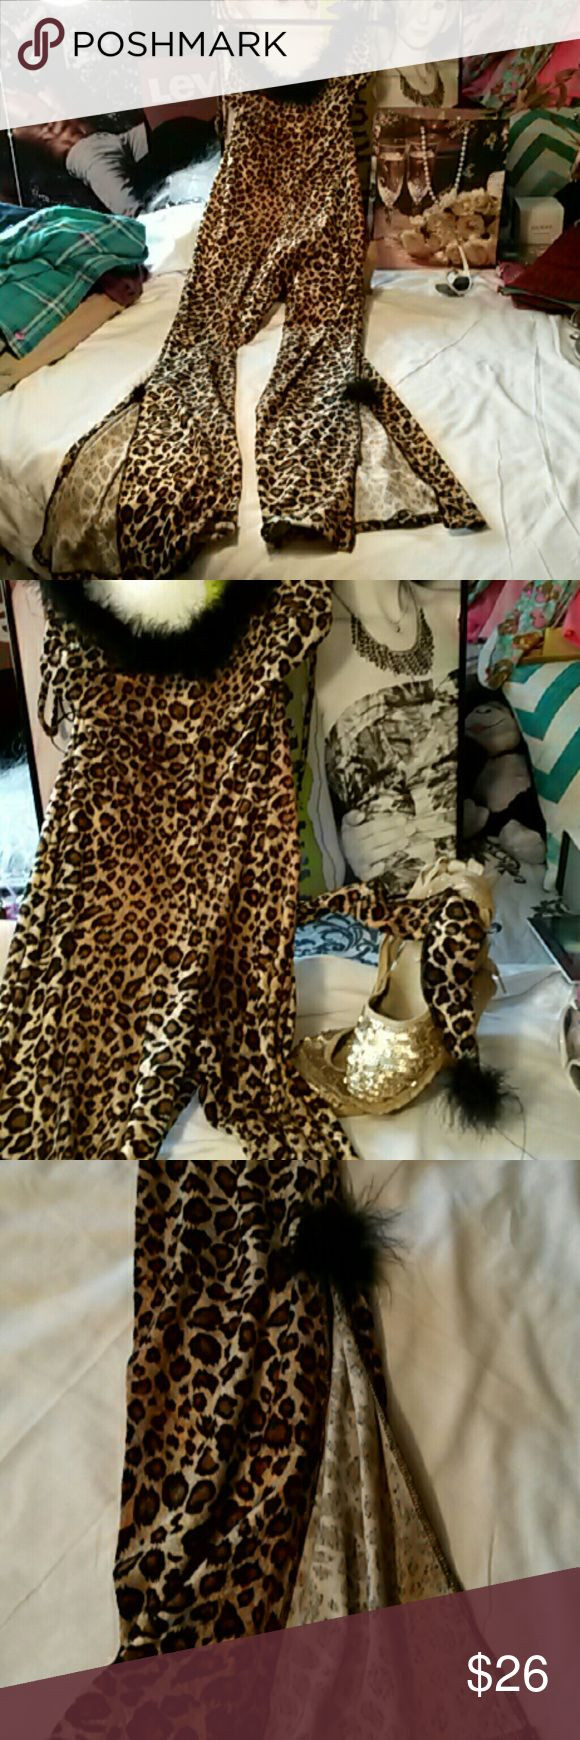 DIY Leopard Costume
 17 Best ideas about Leopard Costume on Pinterest